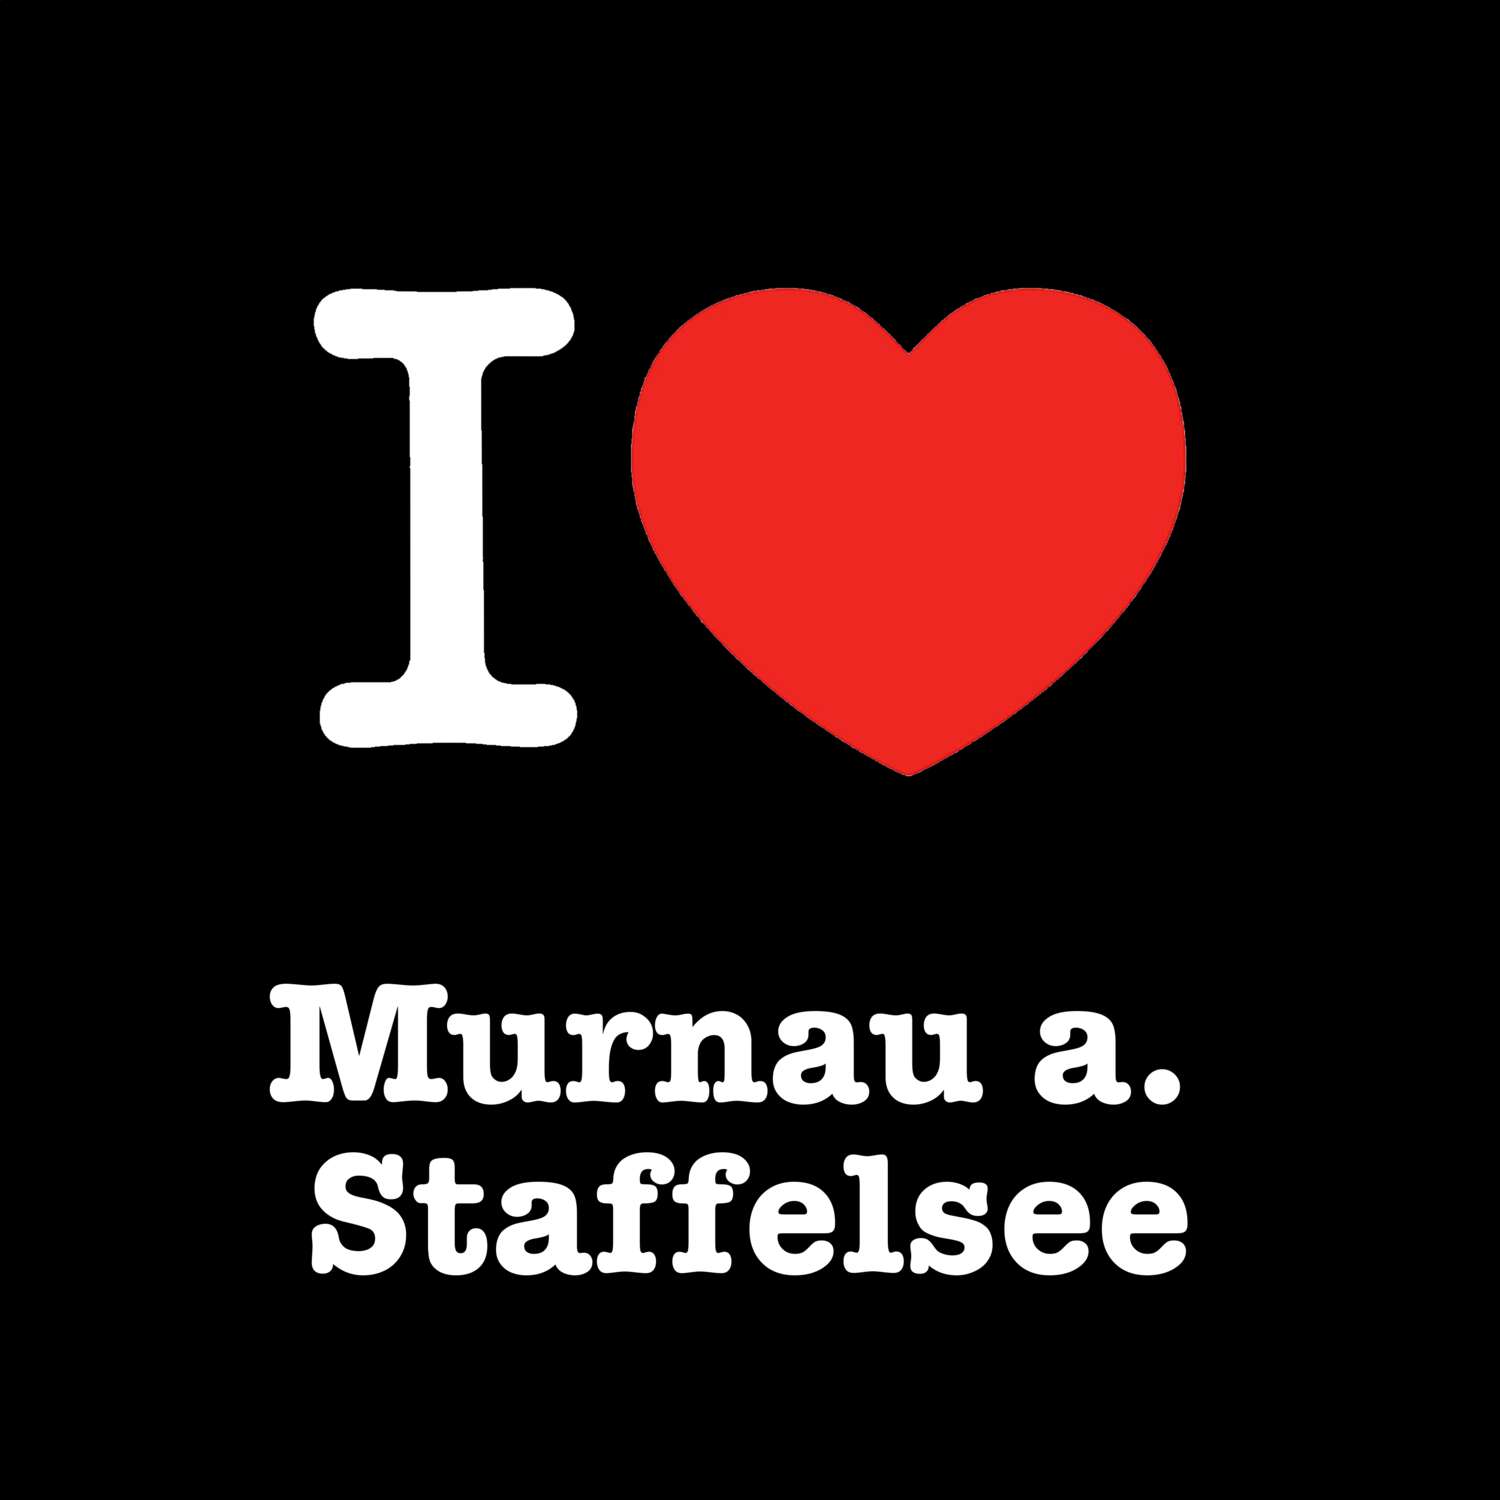 Murnau a. Staffelsee T-Shirt »I love«